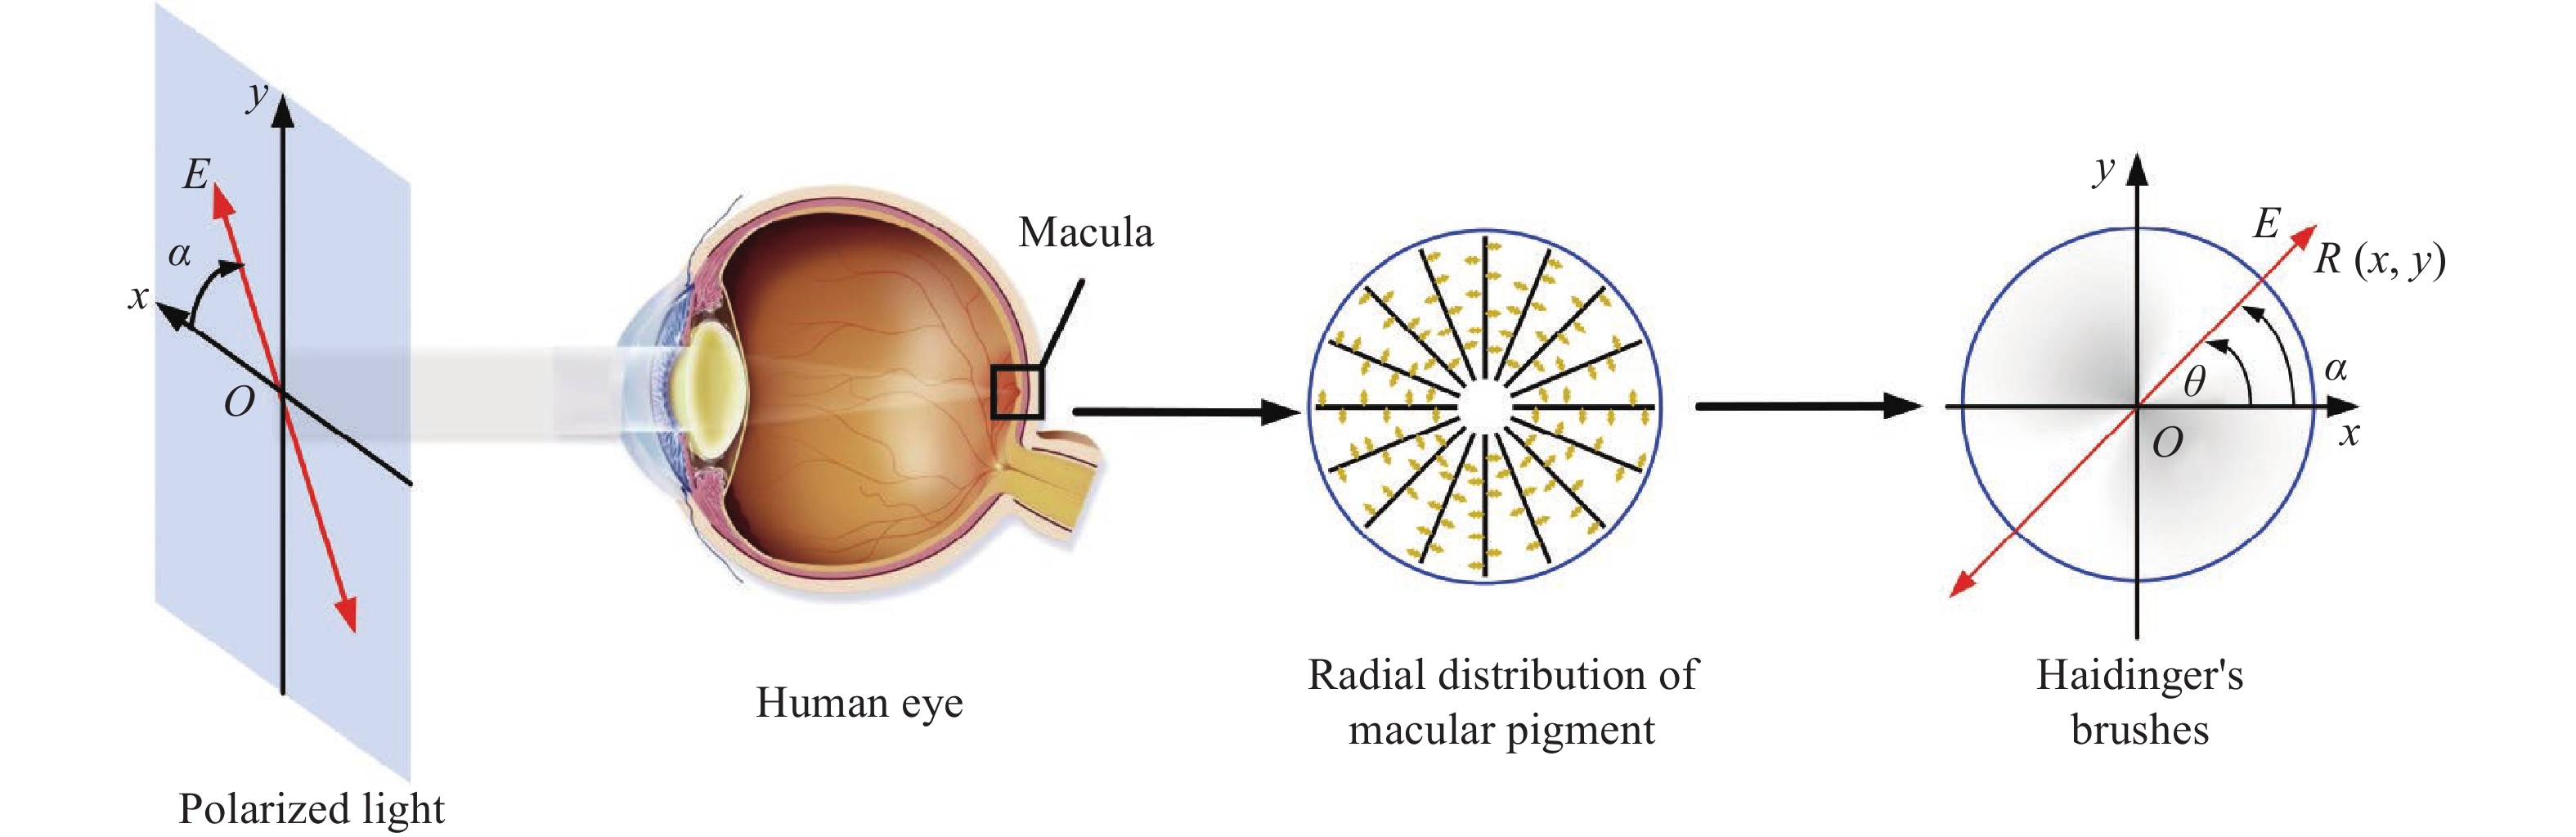 Simplified model diagram of human eye Haidinger's brushes imaging